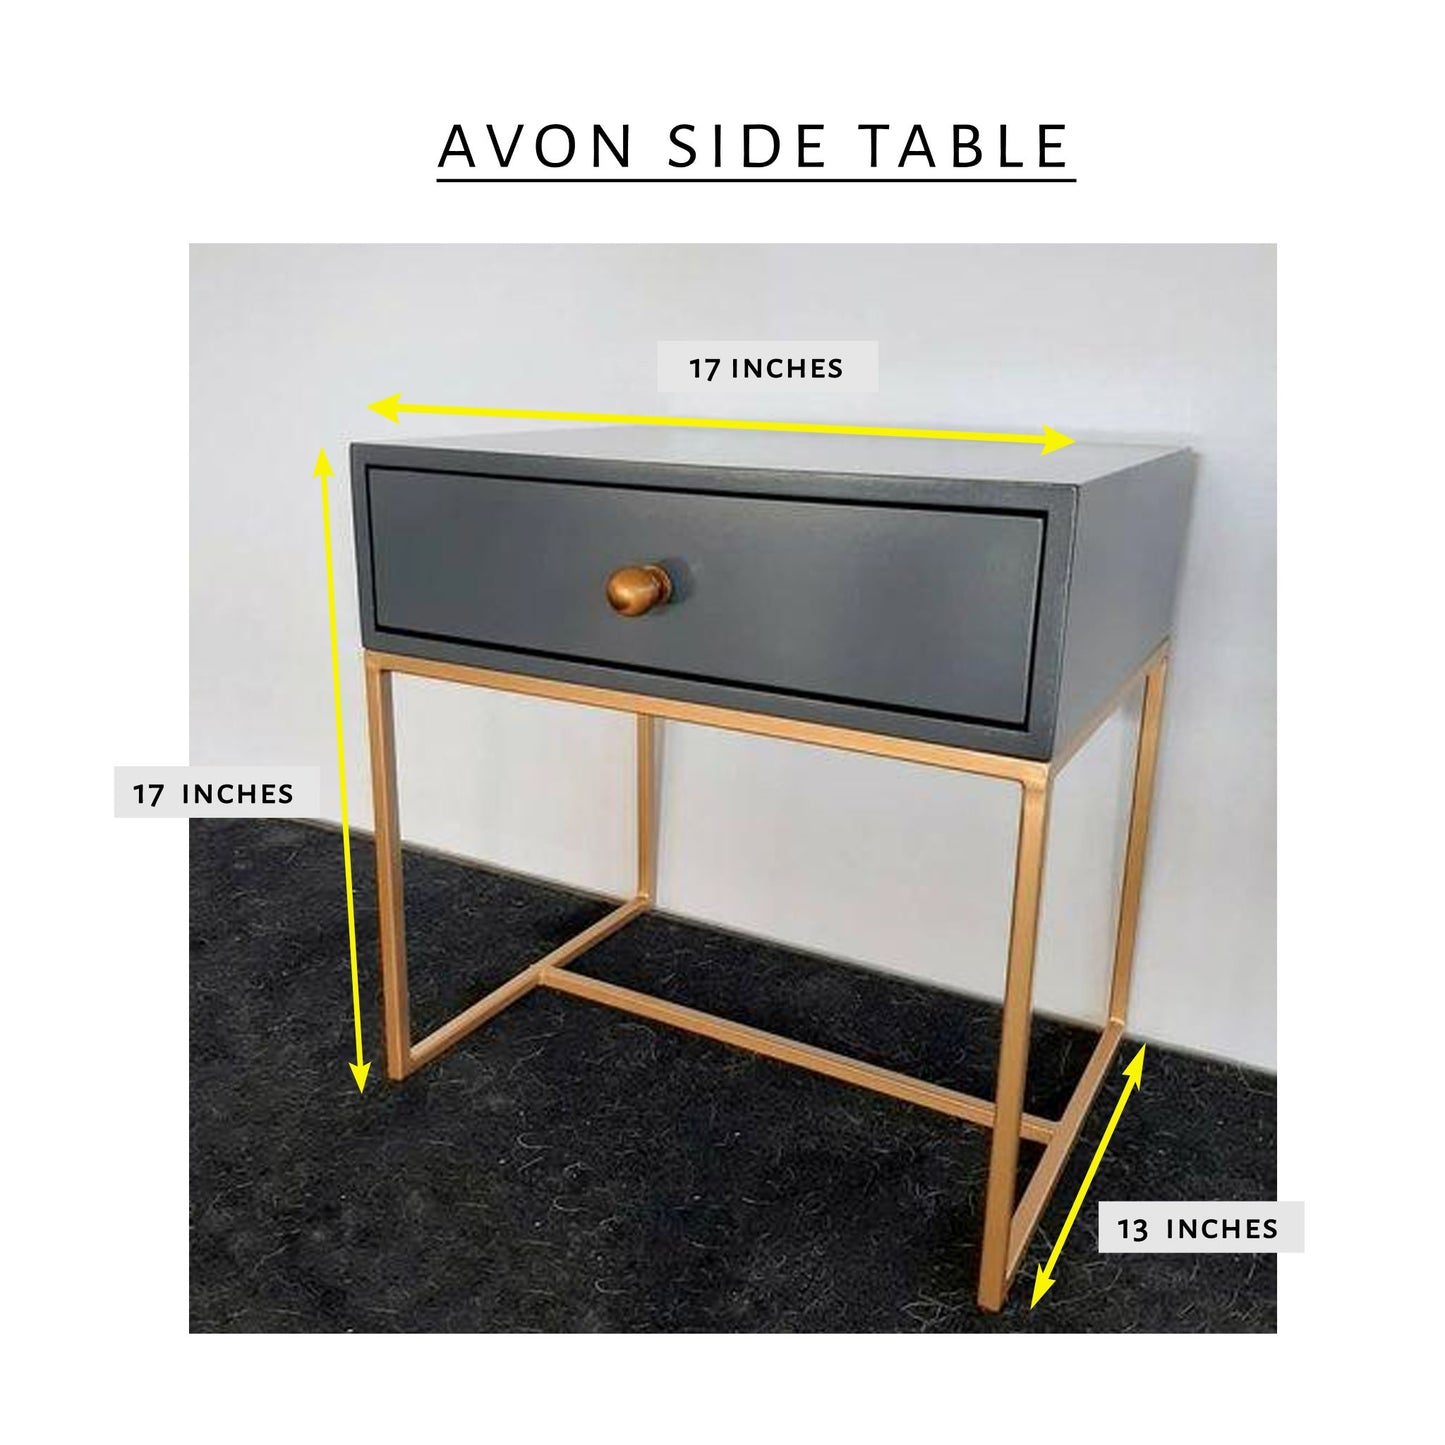 Avon Side Table